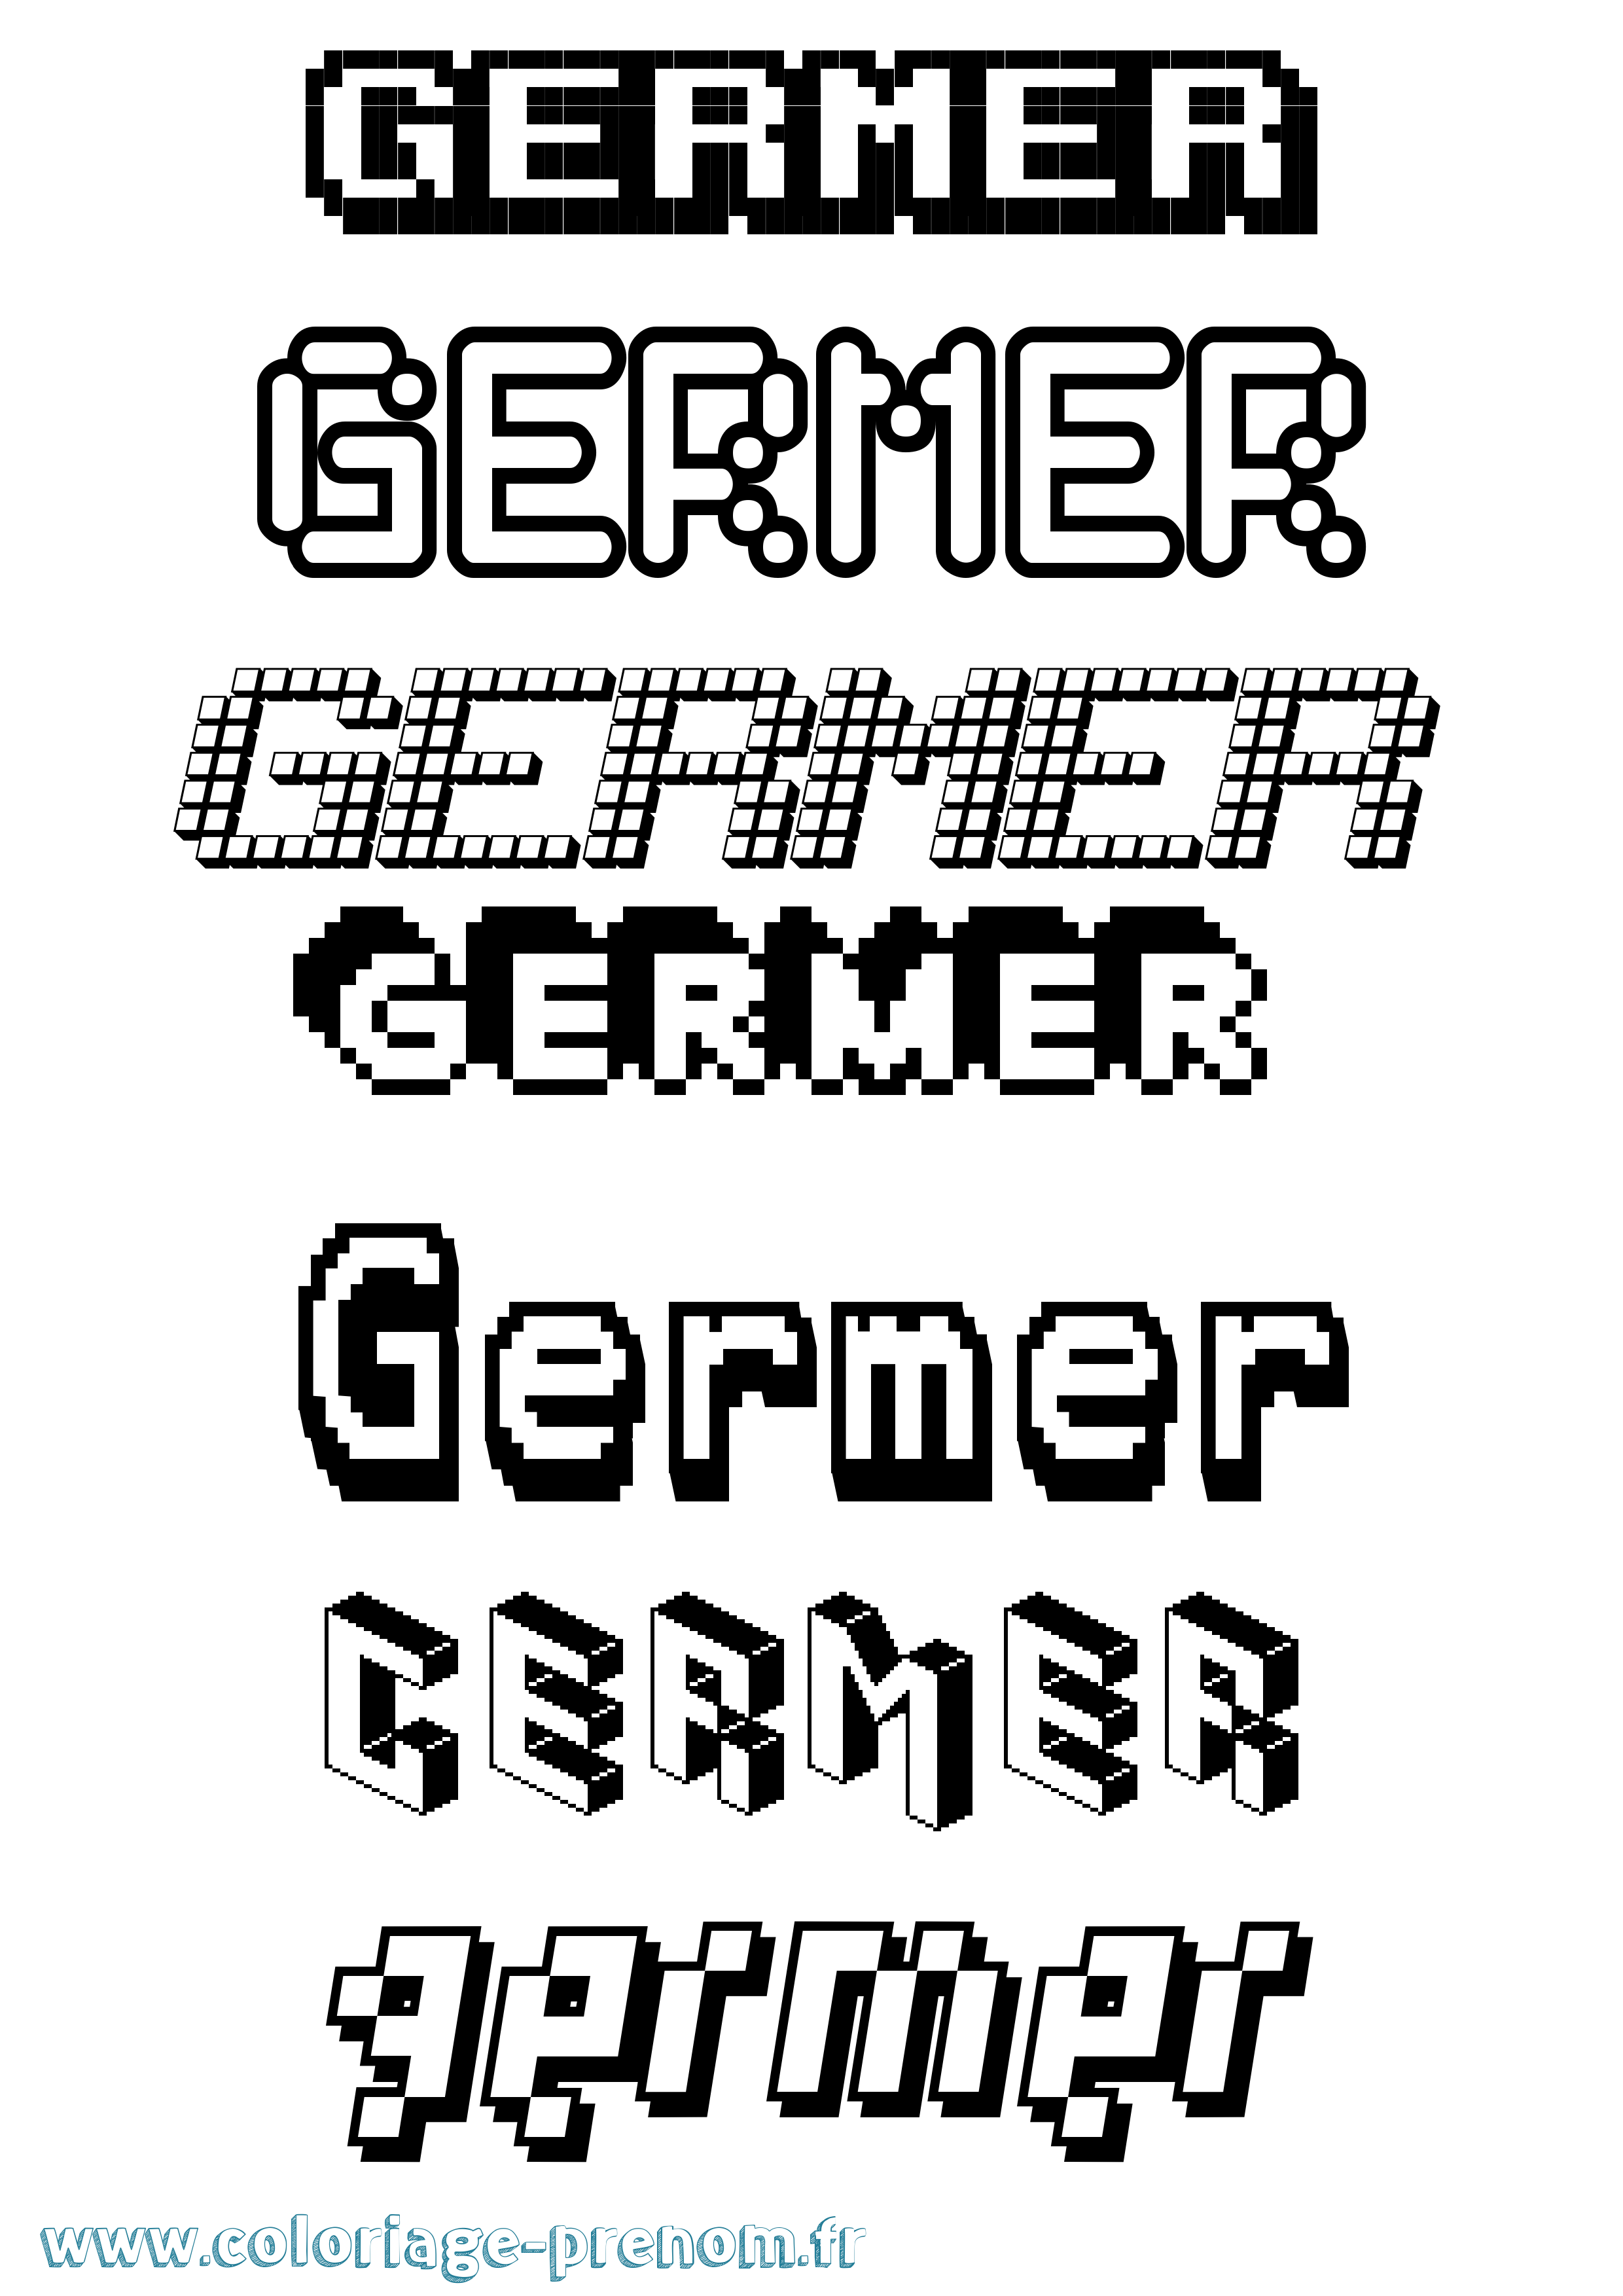 Coloriage prénom Germer Pixel